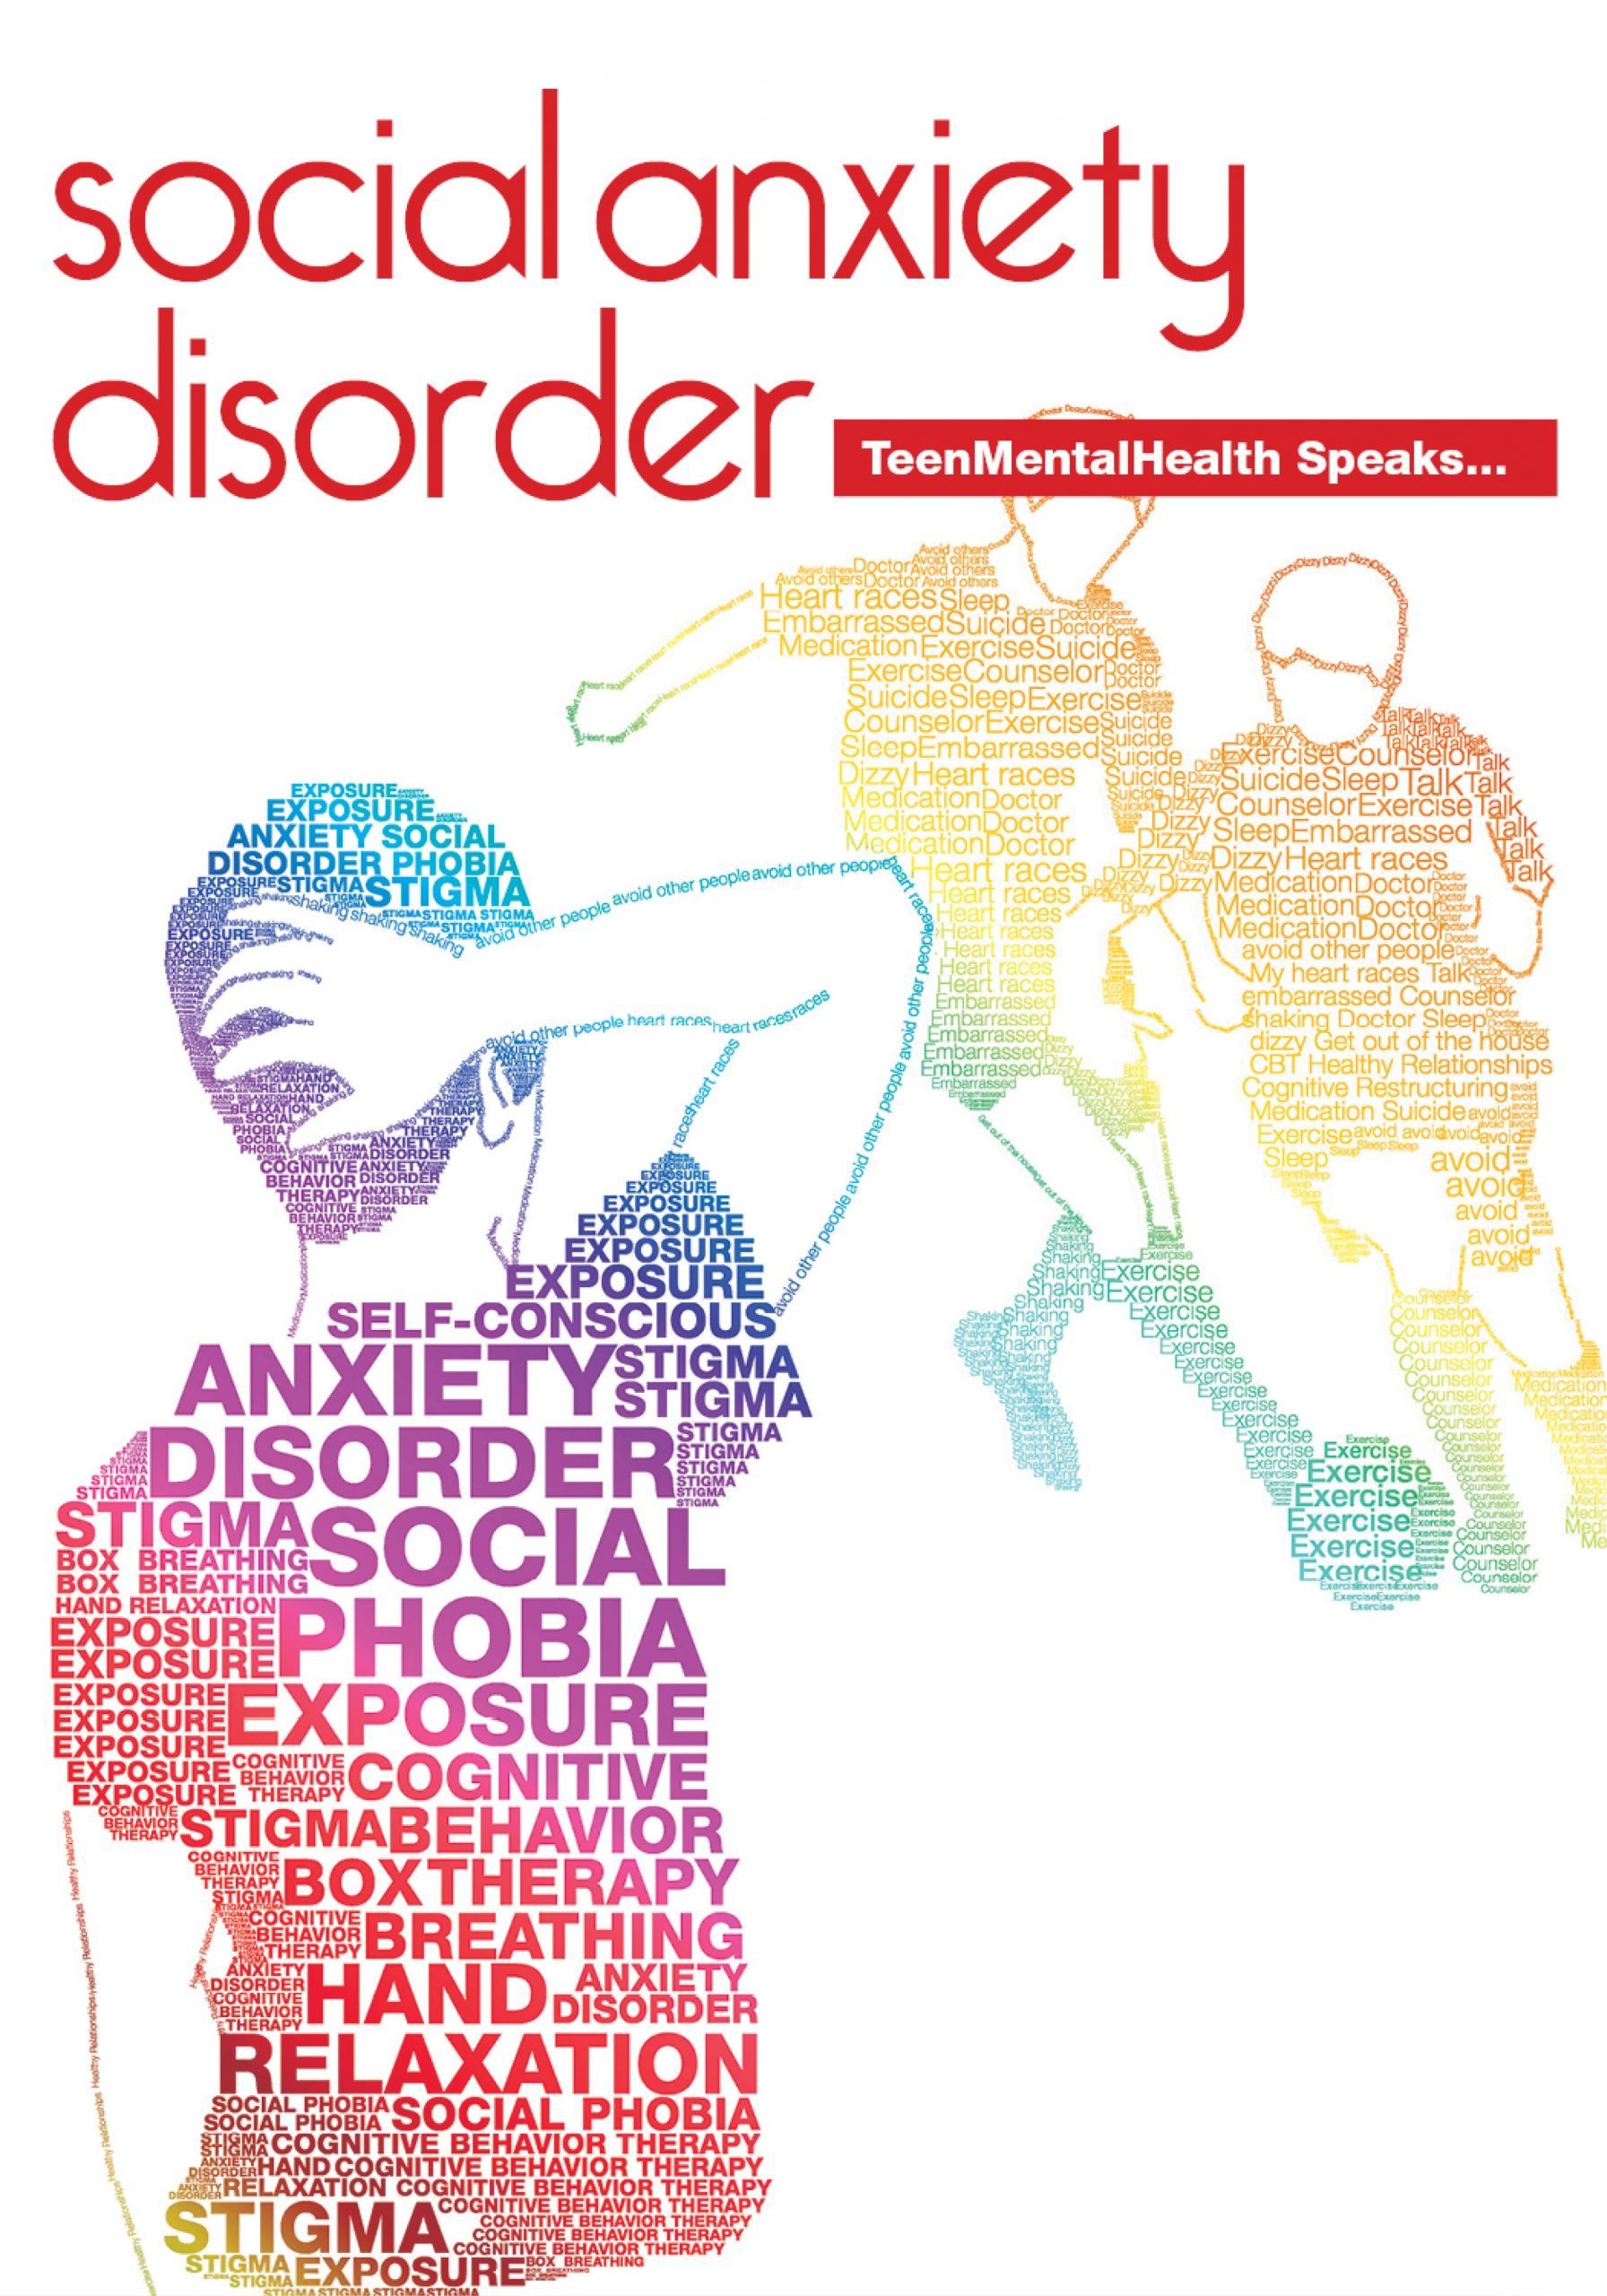 TMH Speaks... Social Anxiety Disorder